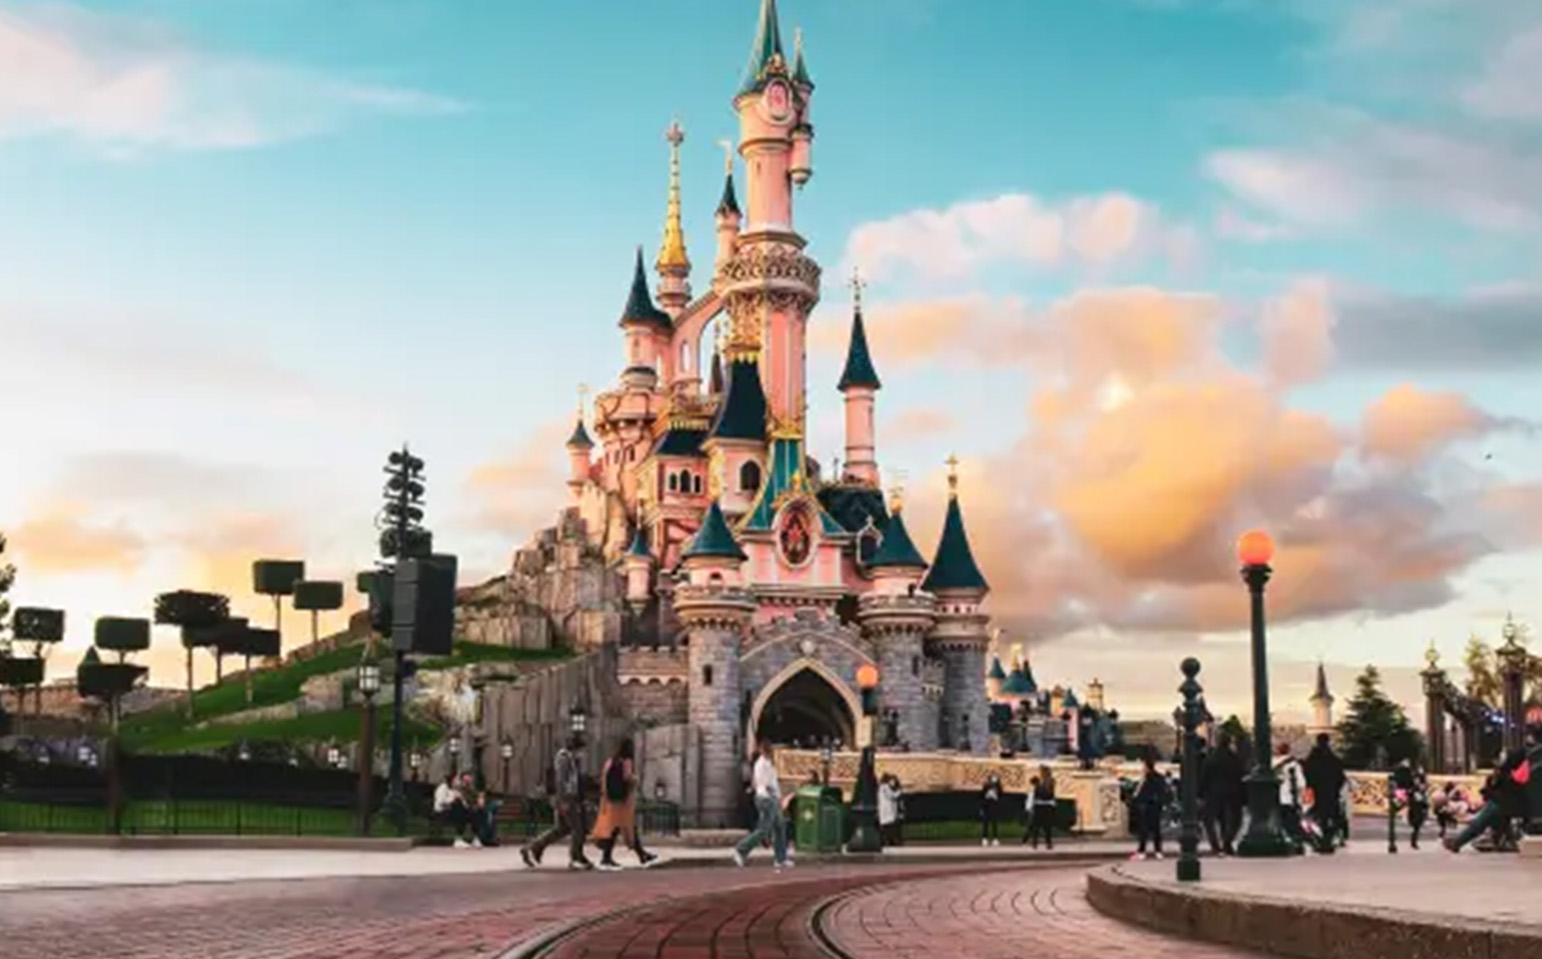 Visit Disneyland with Paris private driver